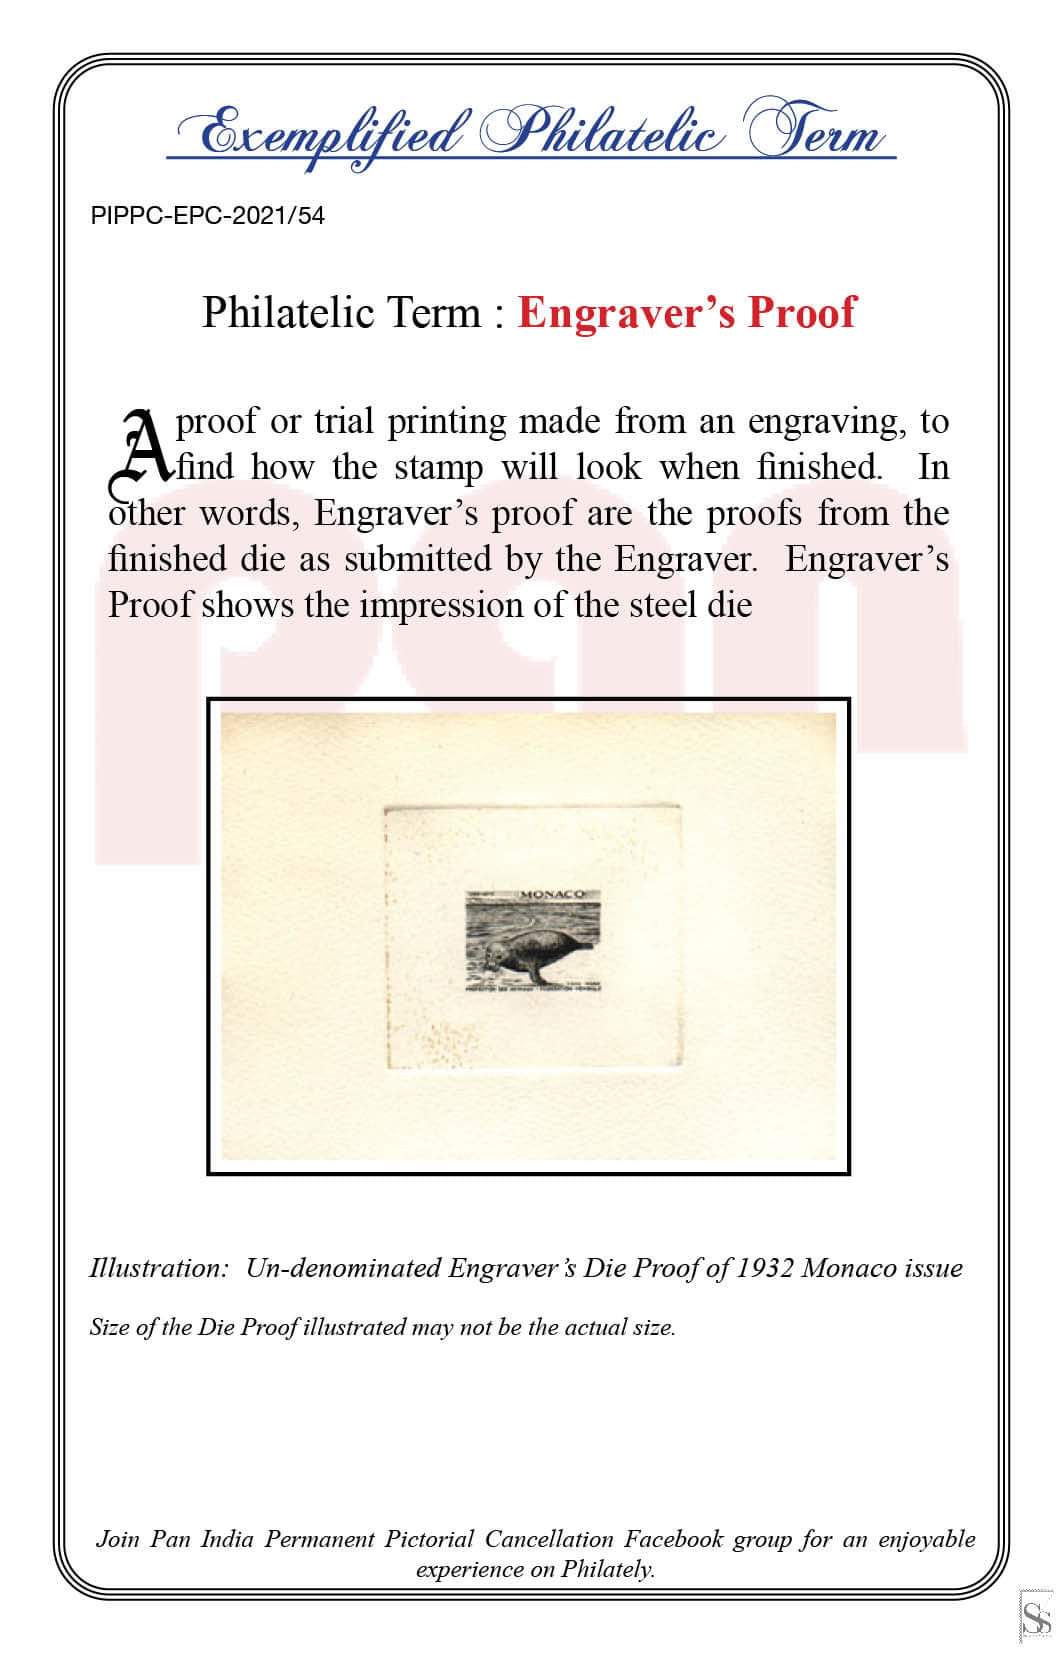 54. Today's Exemplified Philatelic term- Engraver's Proof